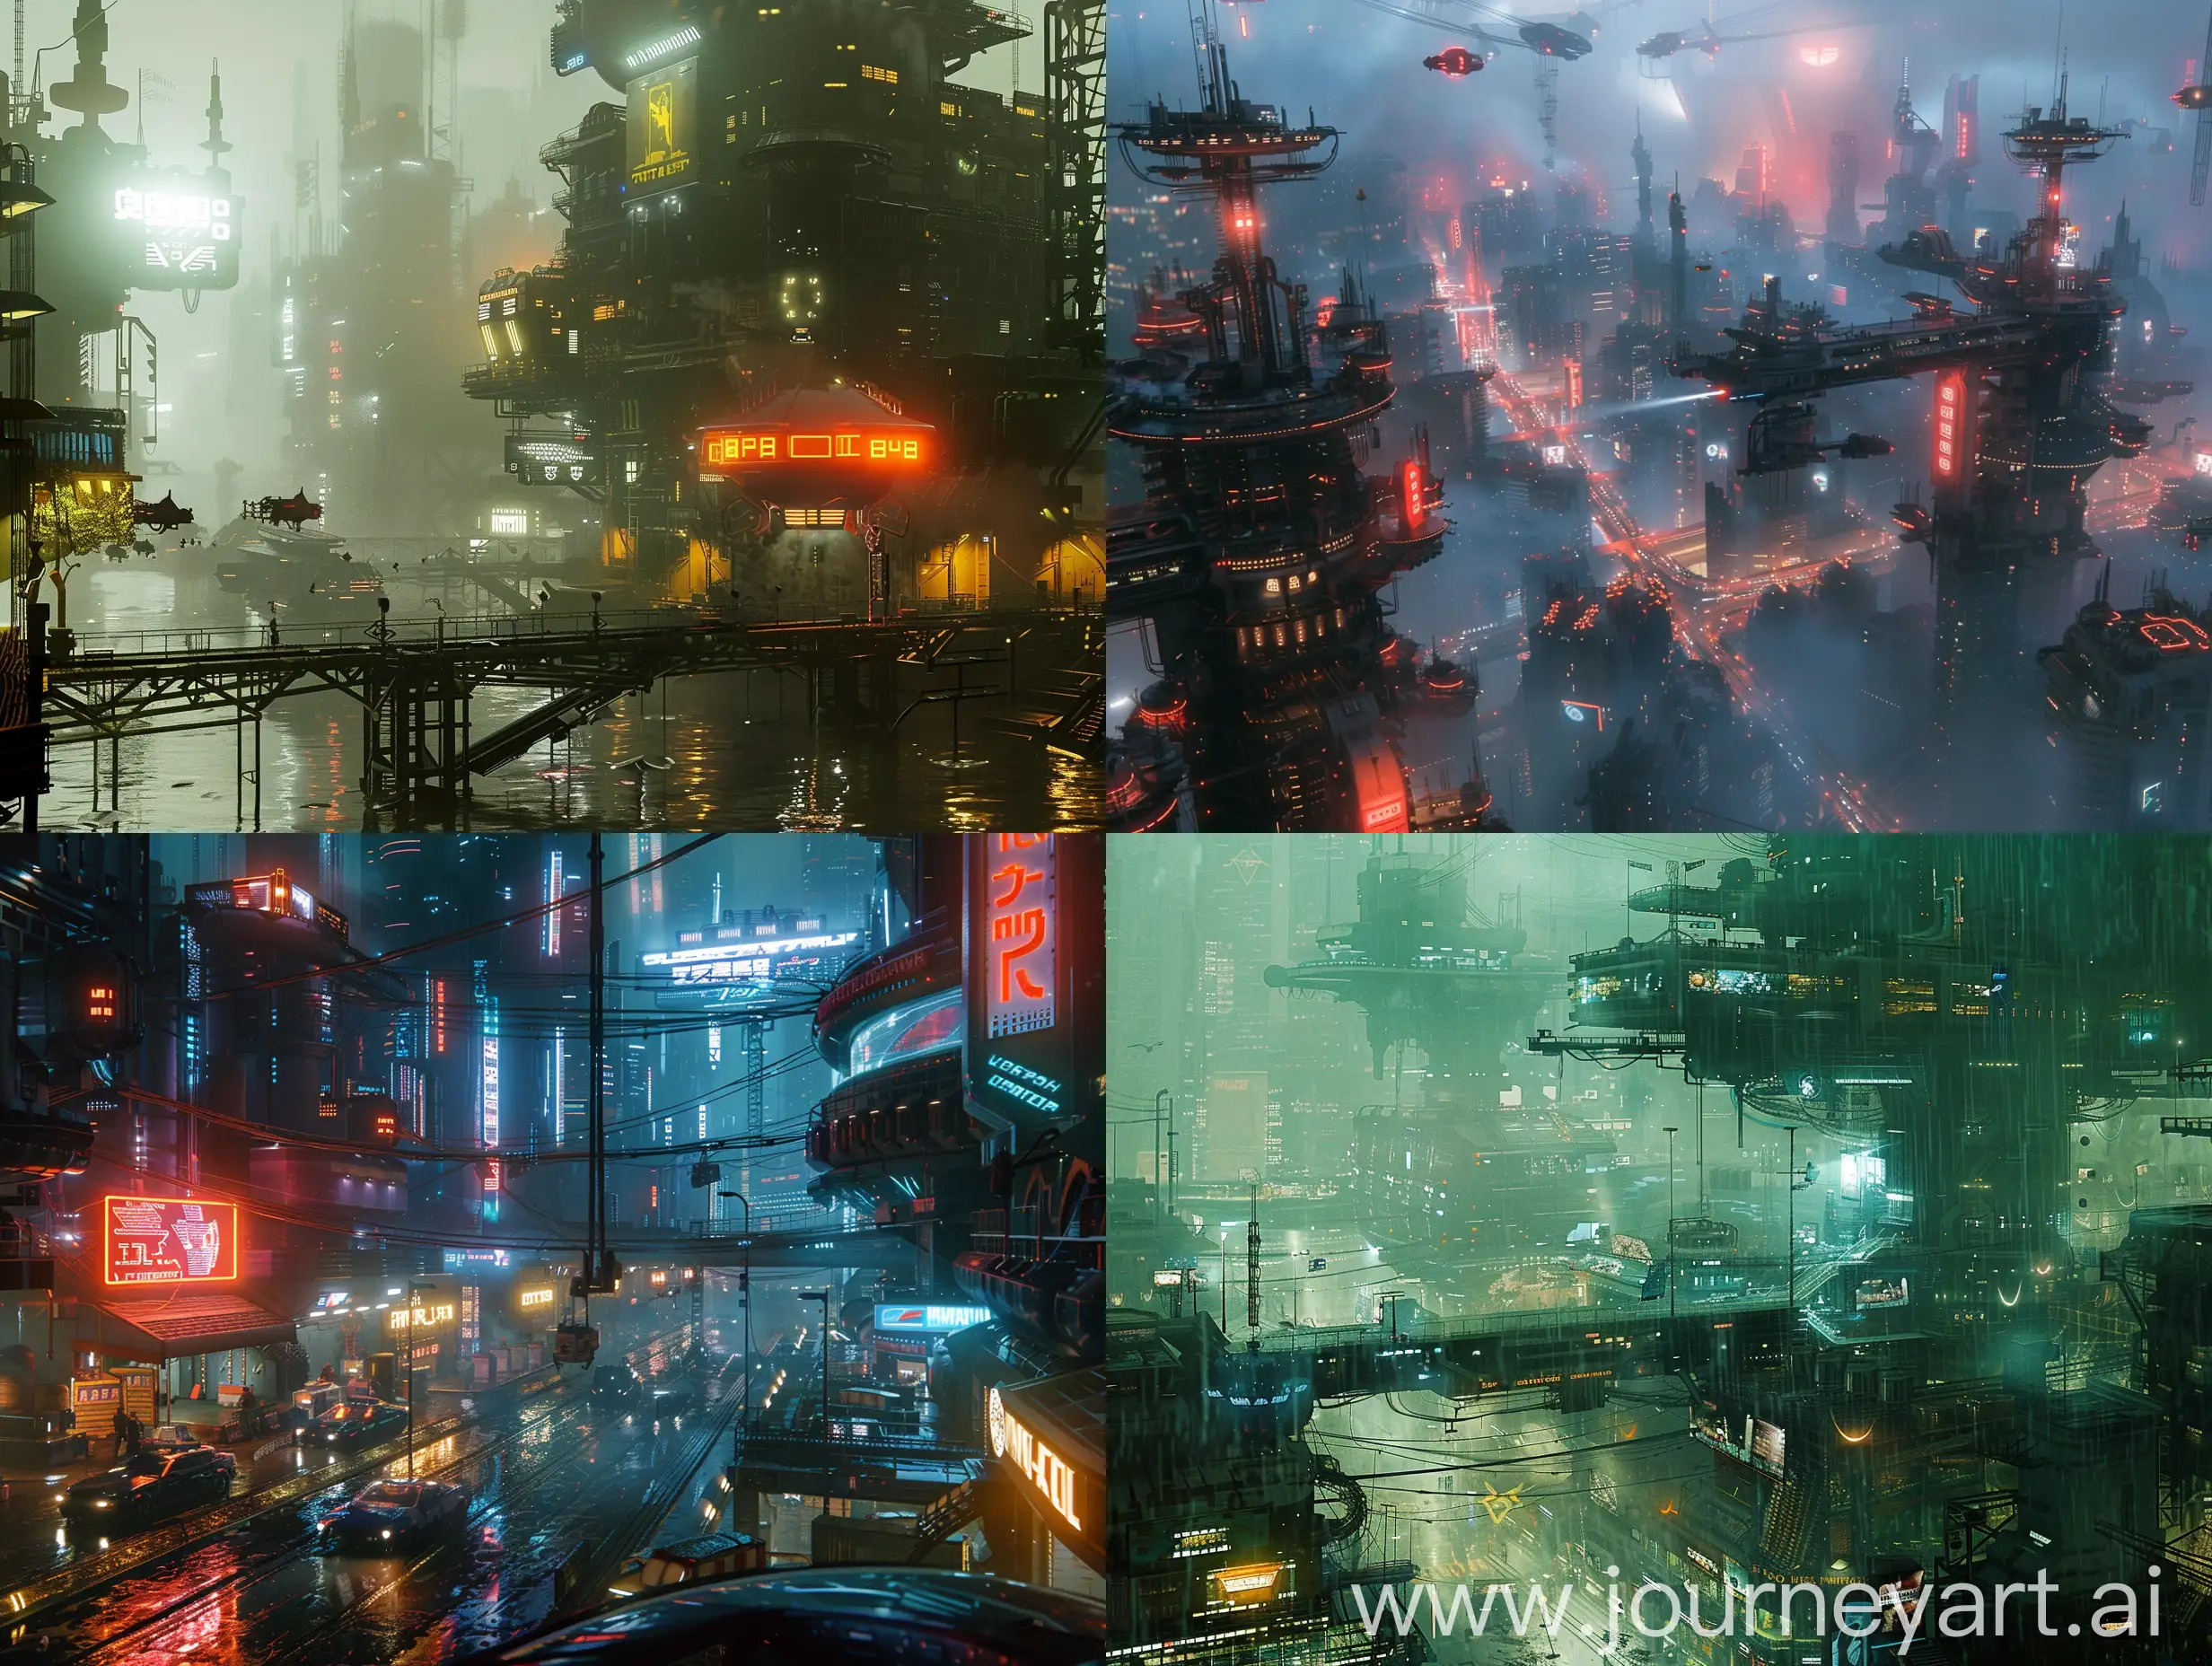 A dystopian futuristic CITY, soft lighting, enviorment